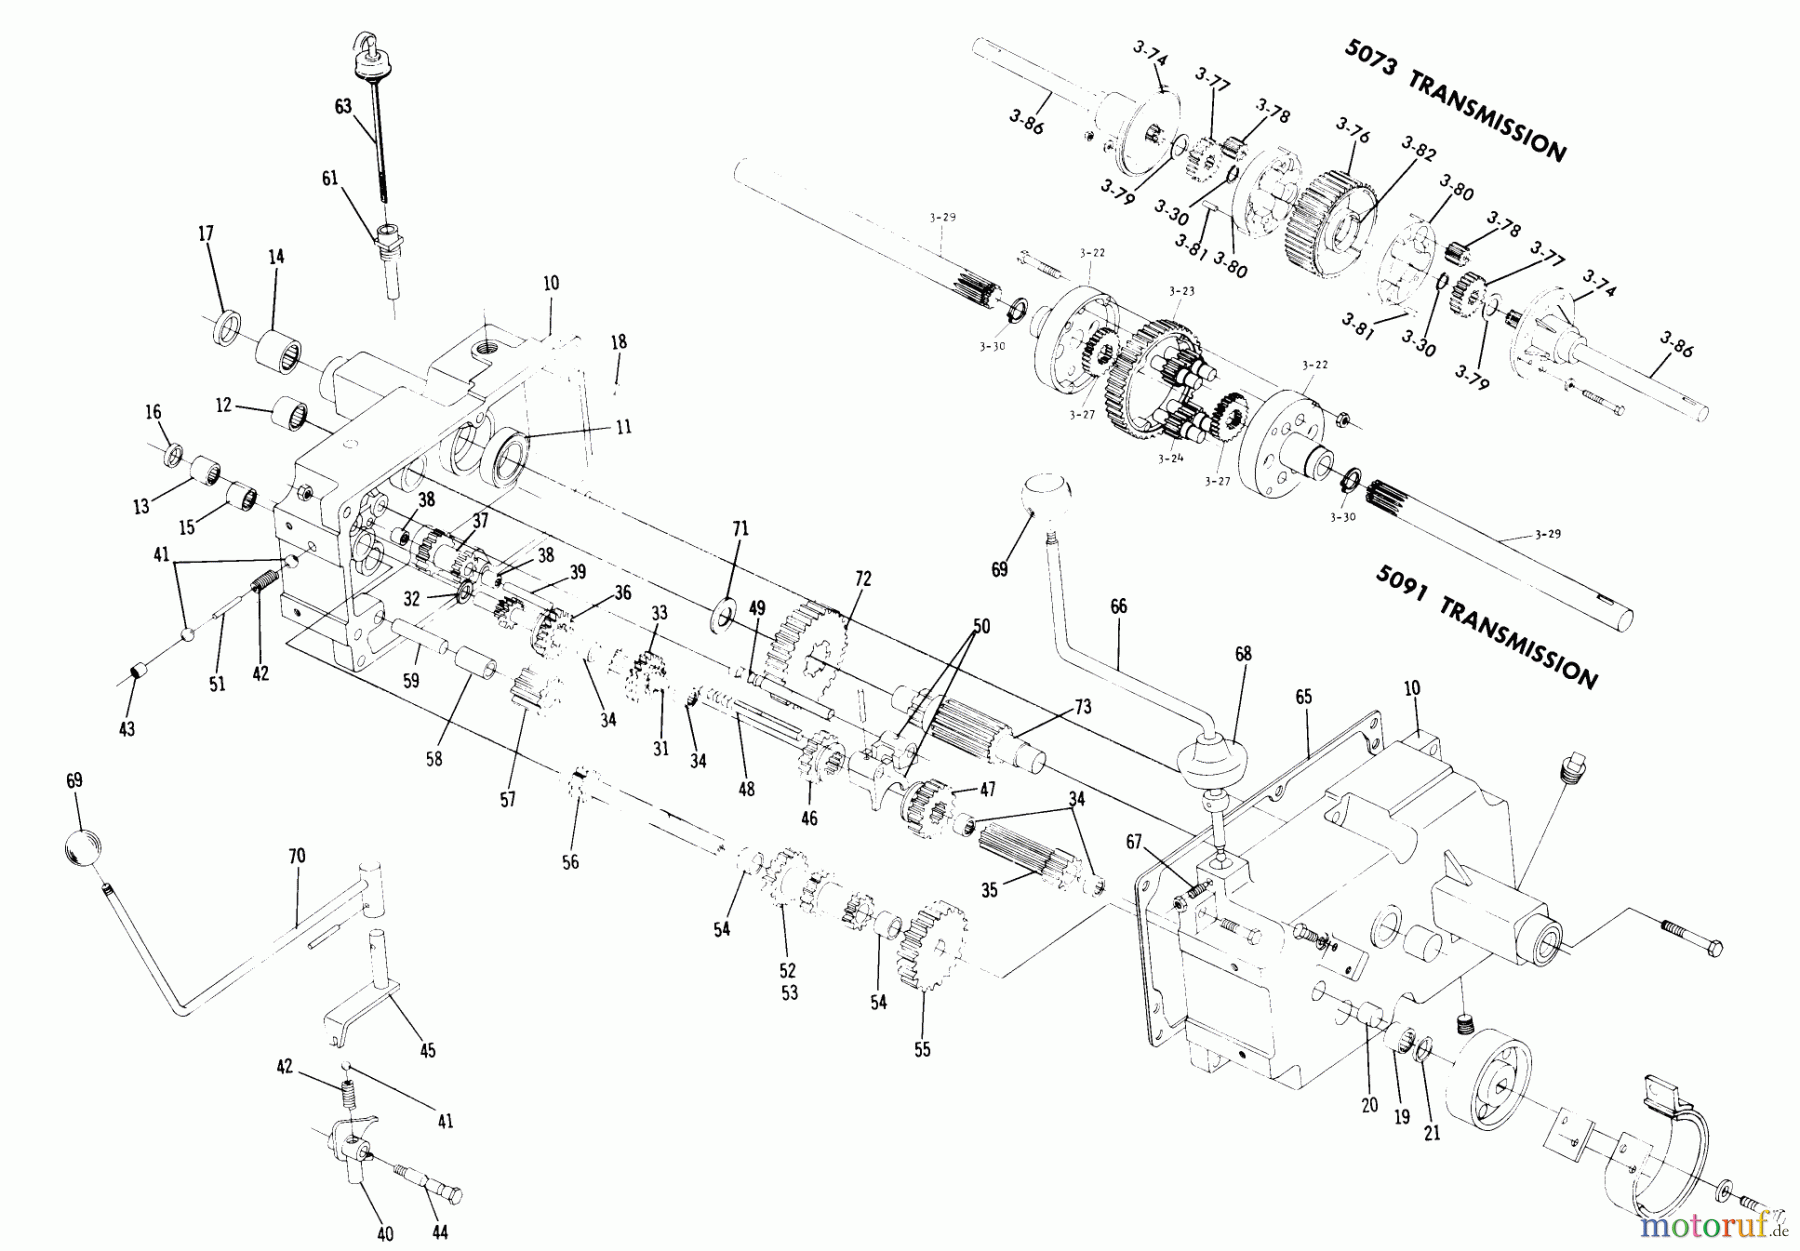  Toro Neu Mowers, Lawn & Garden Tractor Seite 1 1-0390 (C-100) - Toro C-100 8-Speed Tractor, 1974 TRANSMISSION 8-SPEED